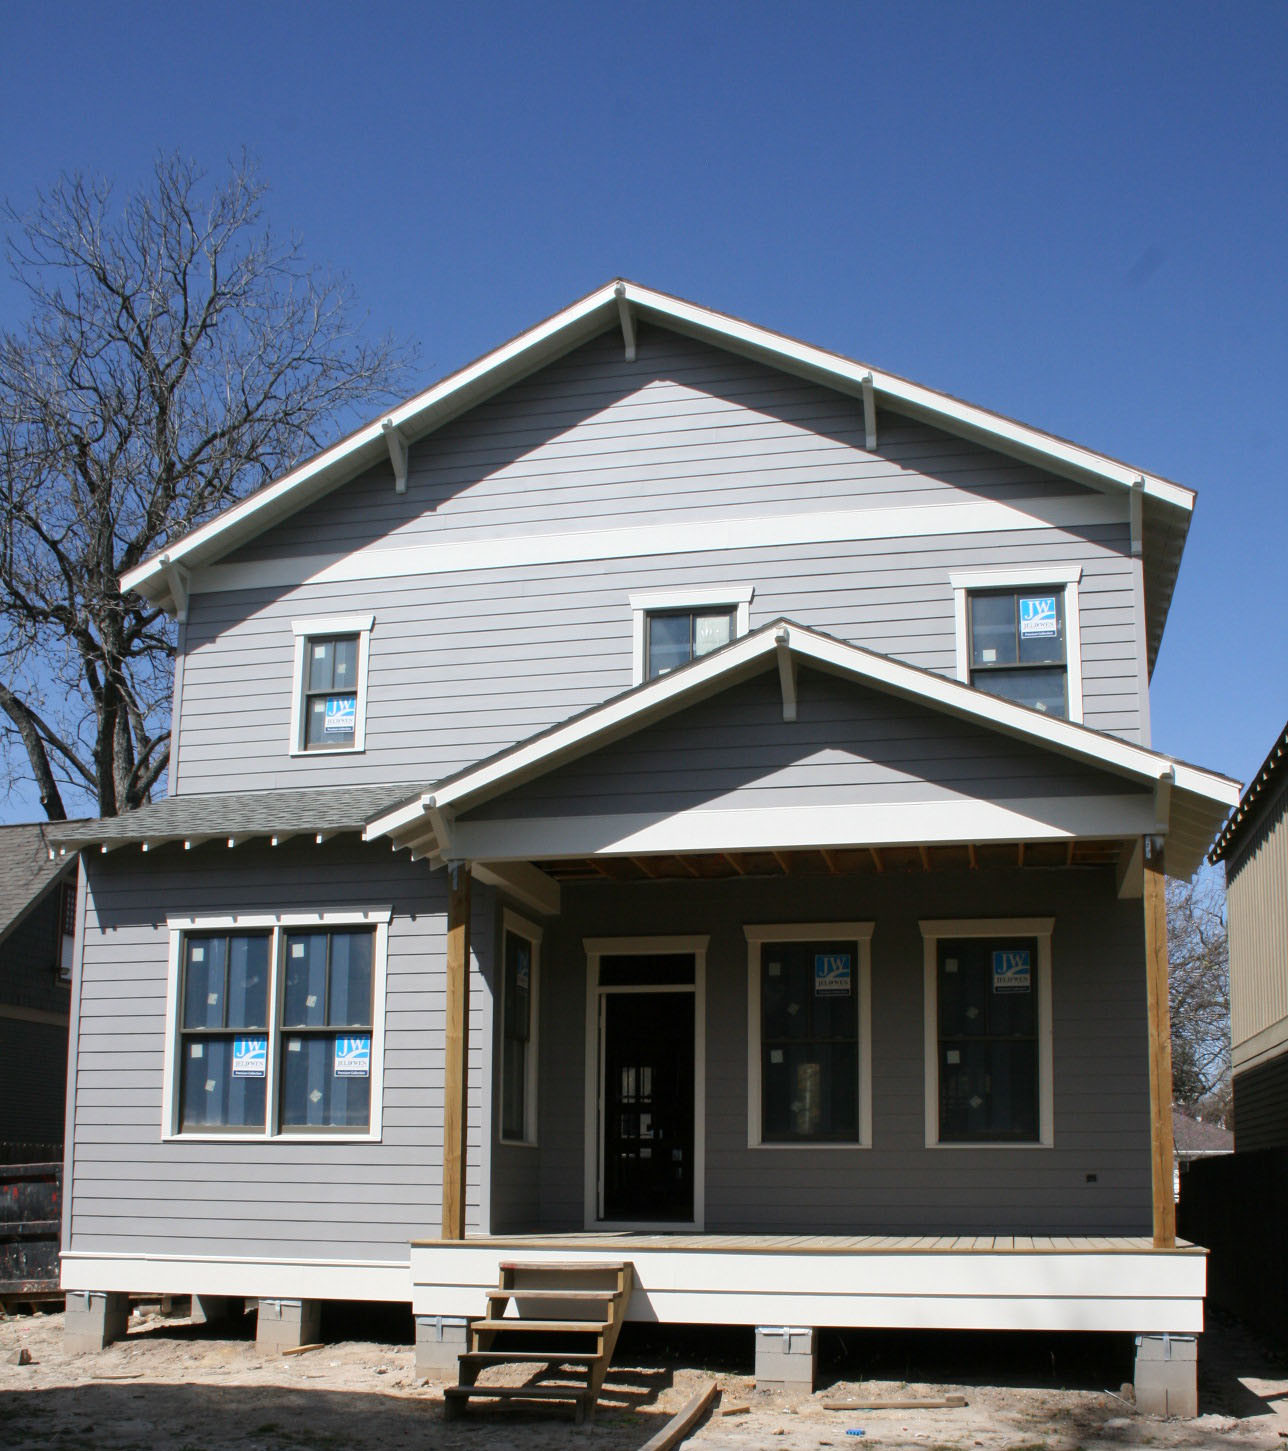 Best ideas about Outdoor Paint Colors
. Save or Pin Our Exterior Paint Colors Cedar Hill Farmhouse Now.